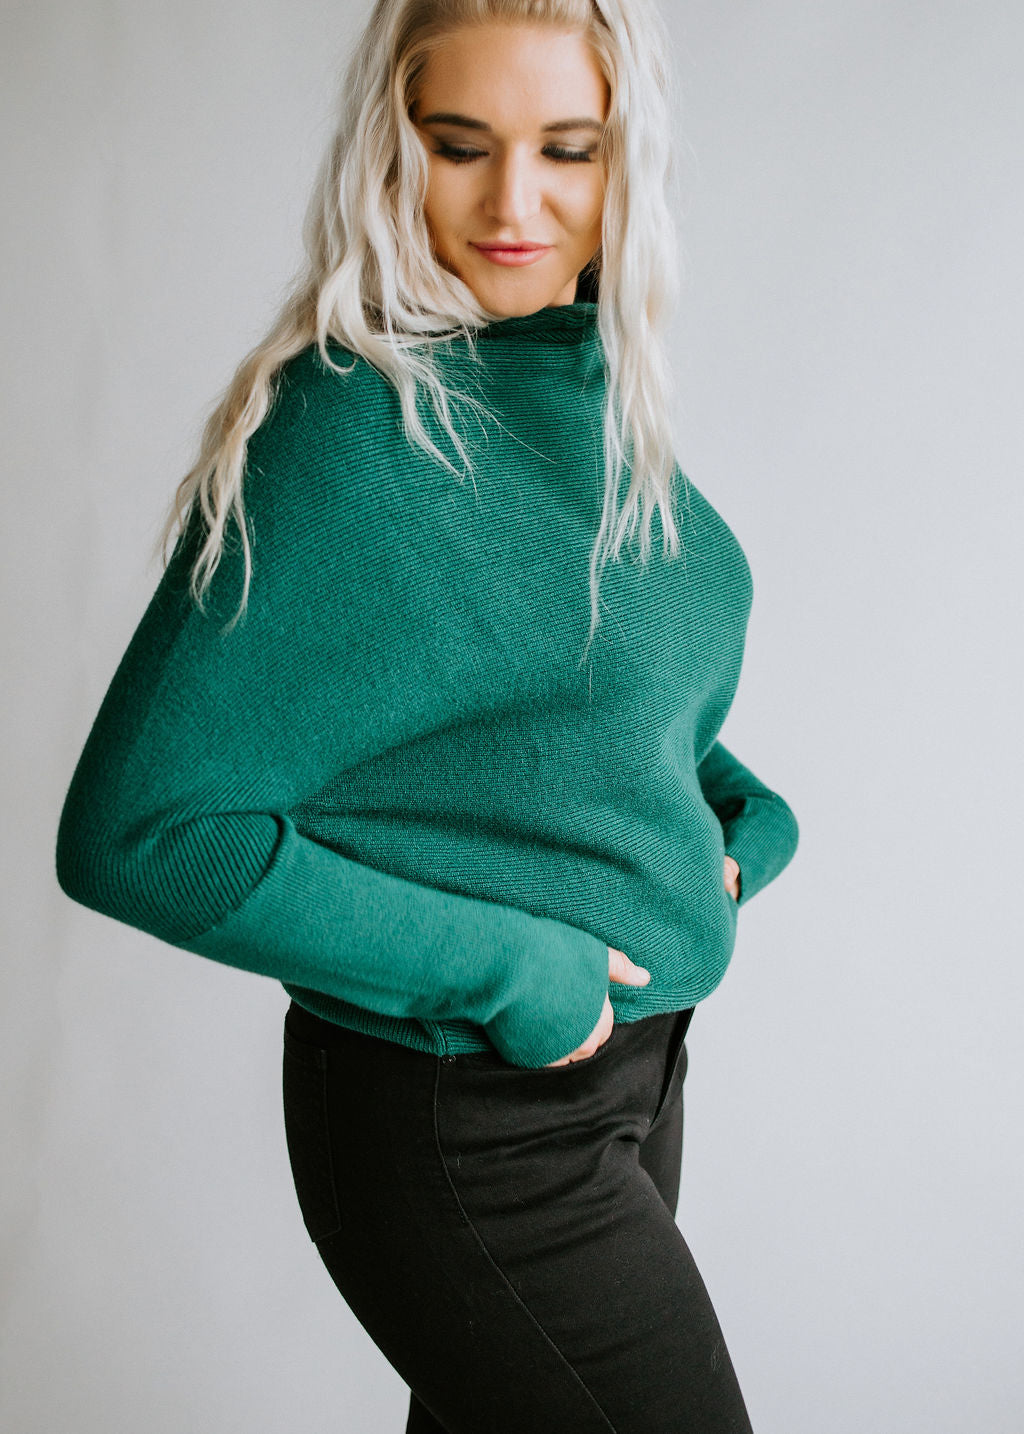 Sweater Of Intent Dolman Sweater FINAL SALE